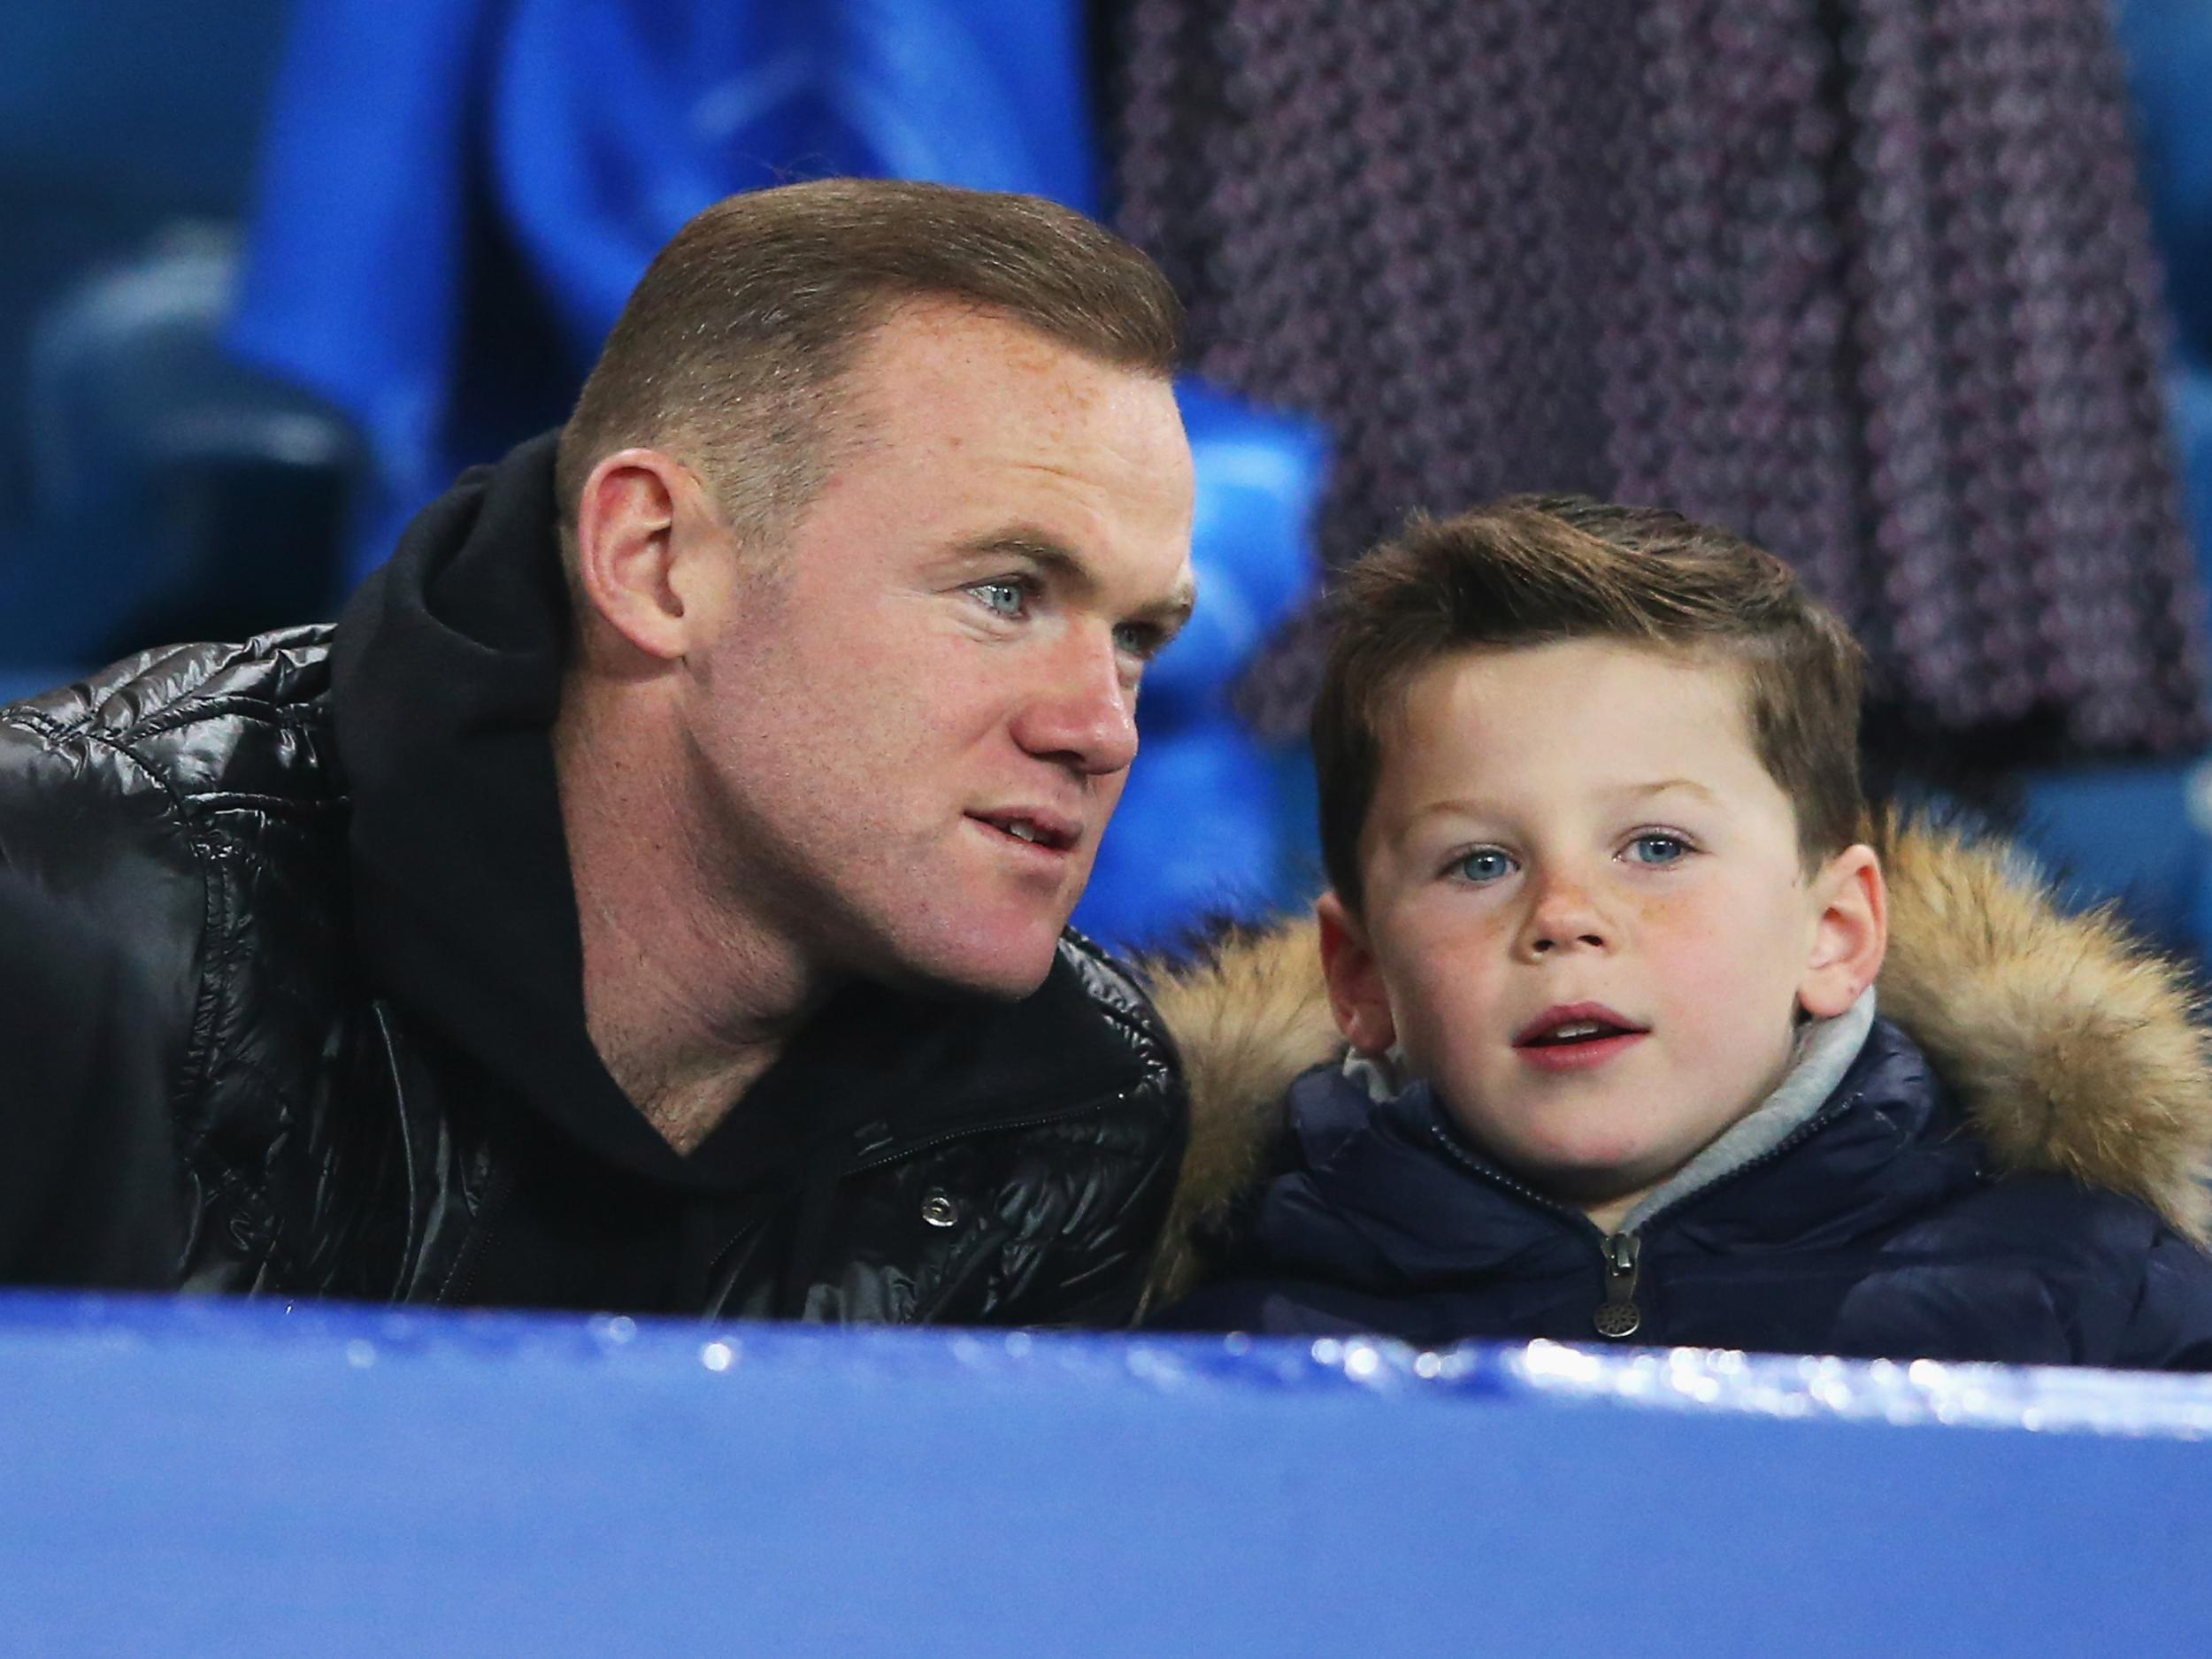 Wayne Rooney and his son, Kai